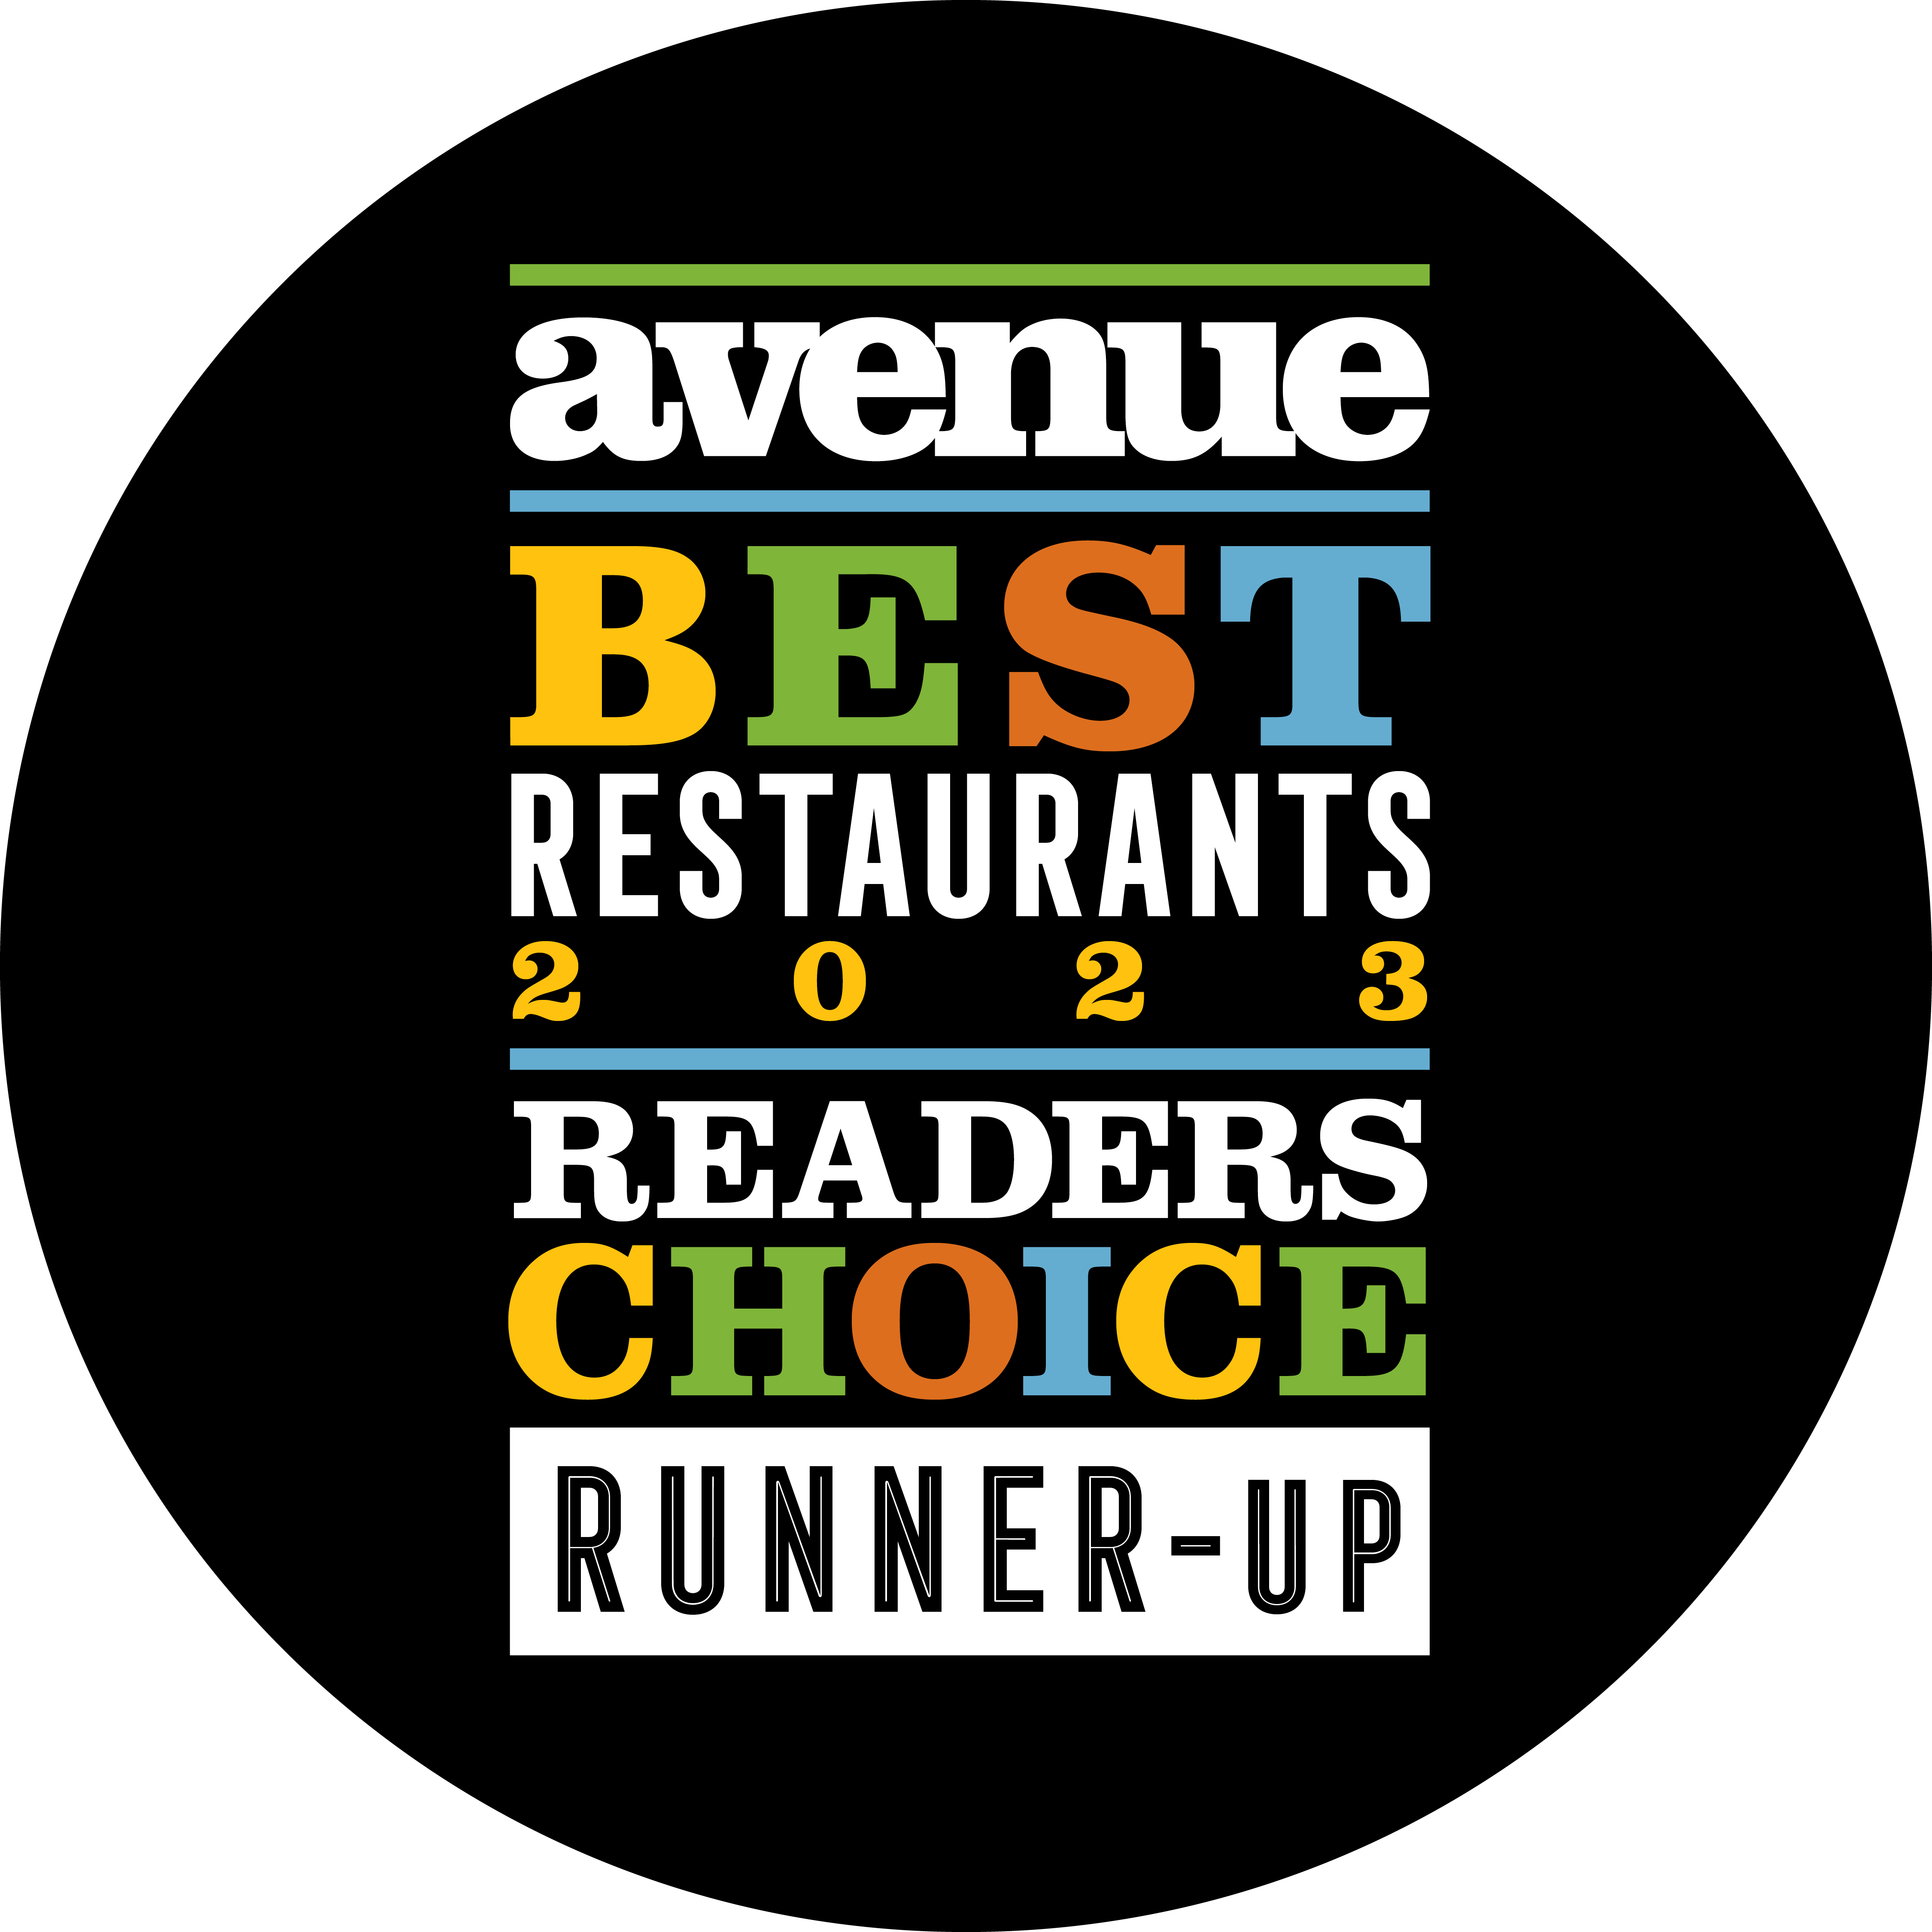 Avenue Best Restaurants 2023 Readers Choice Runner Up badge